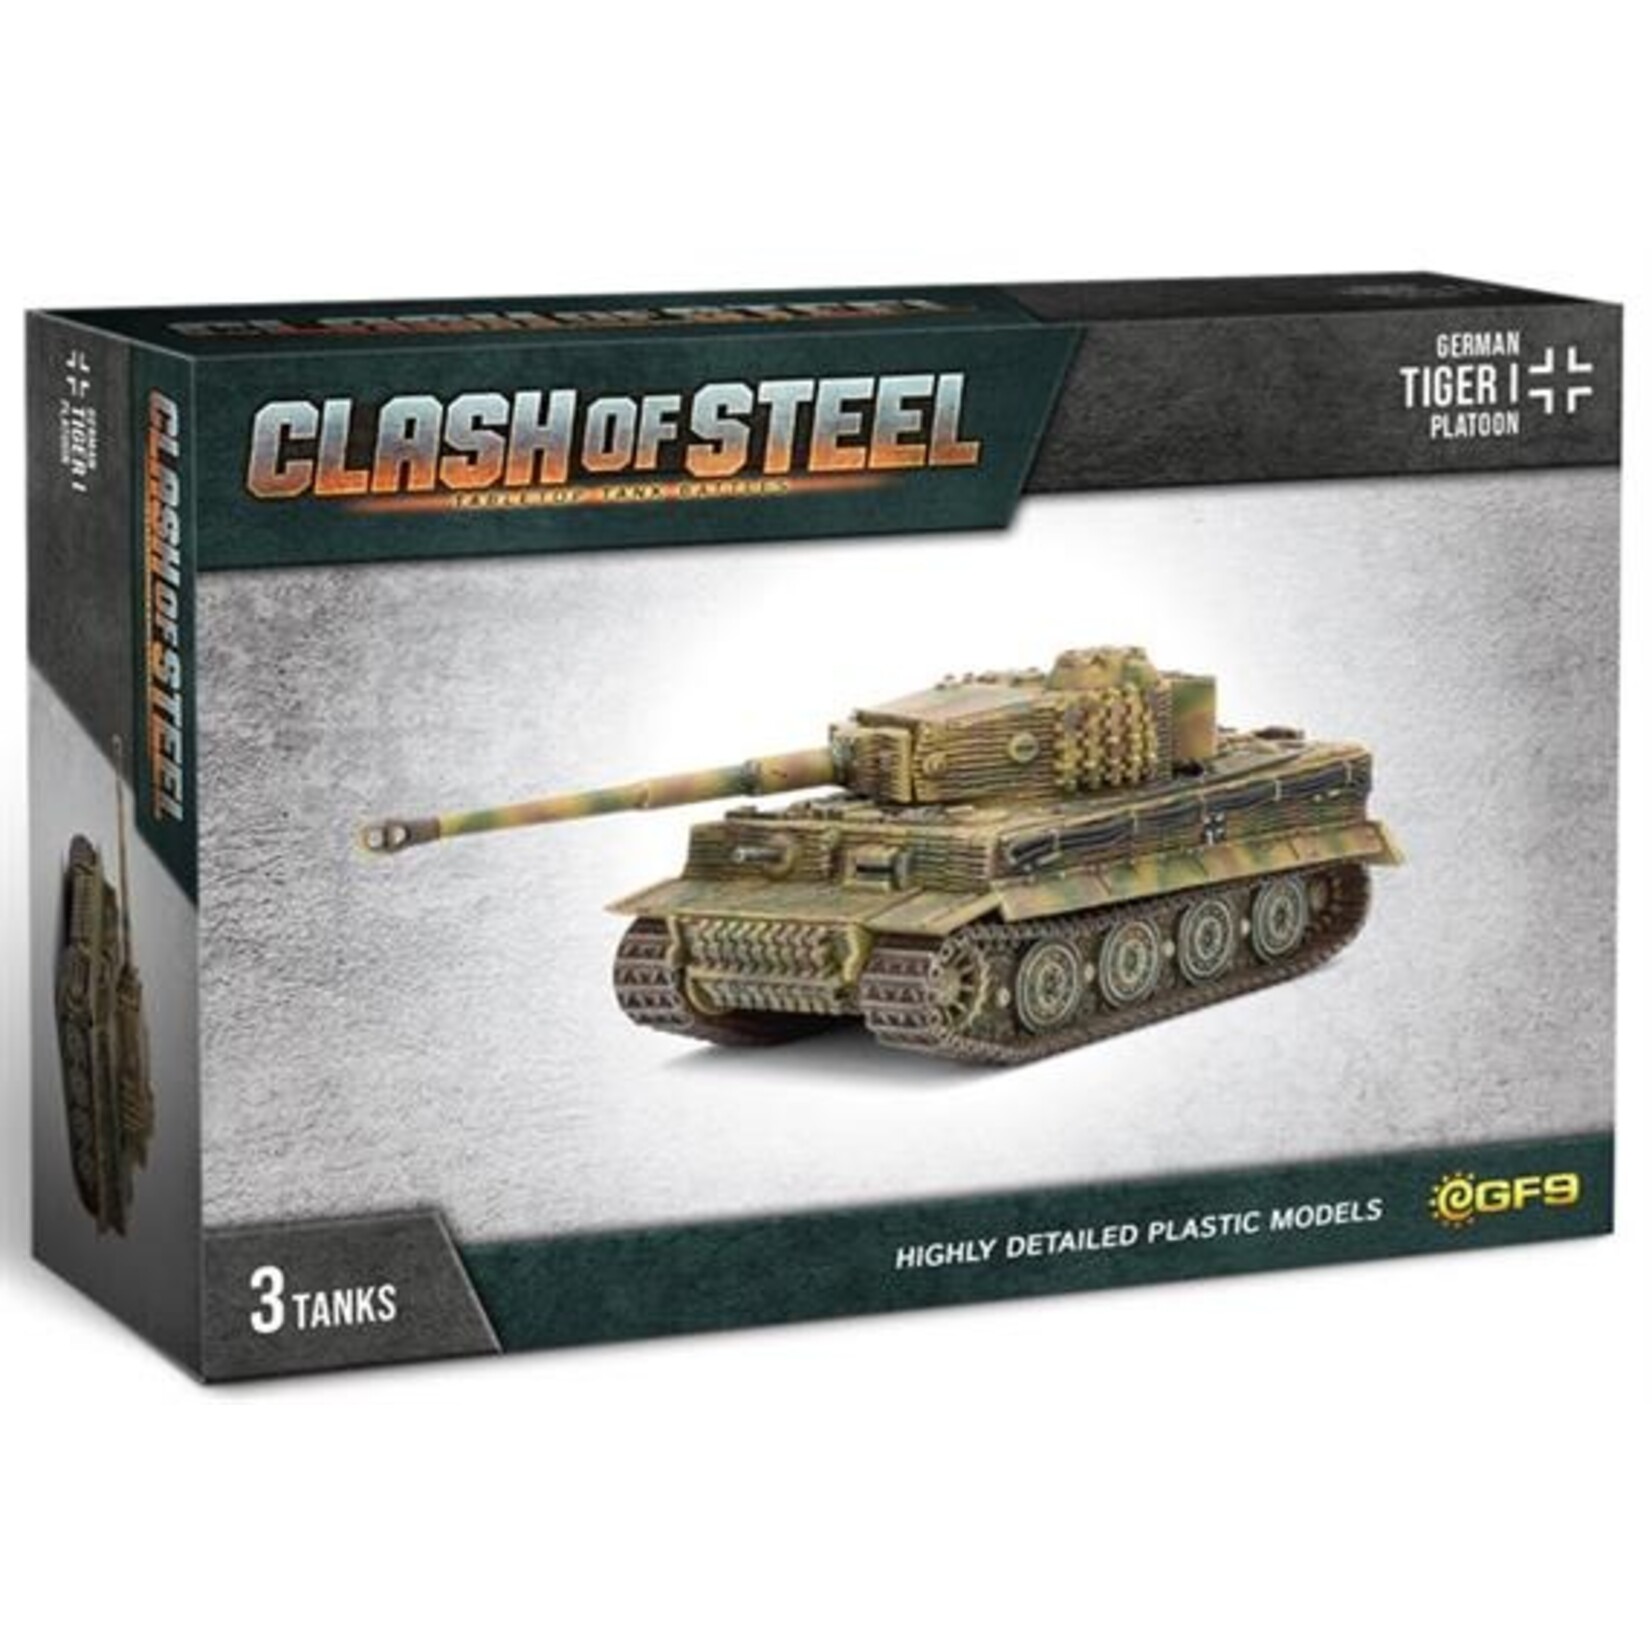 Clash Of Steel German Tiger 1 Platoon